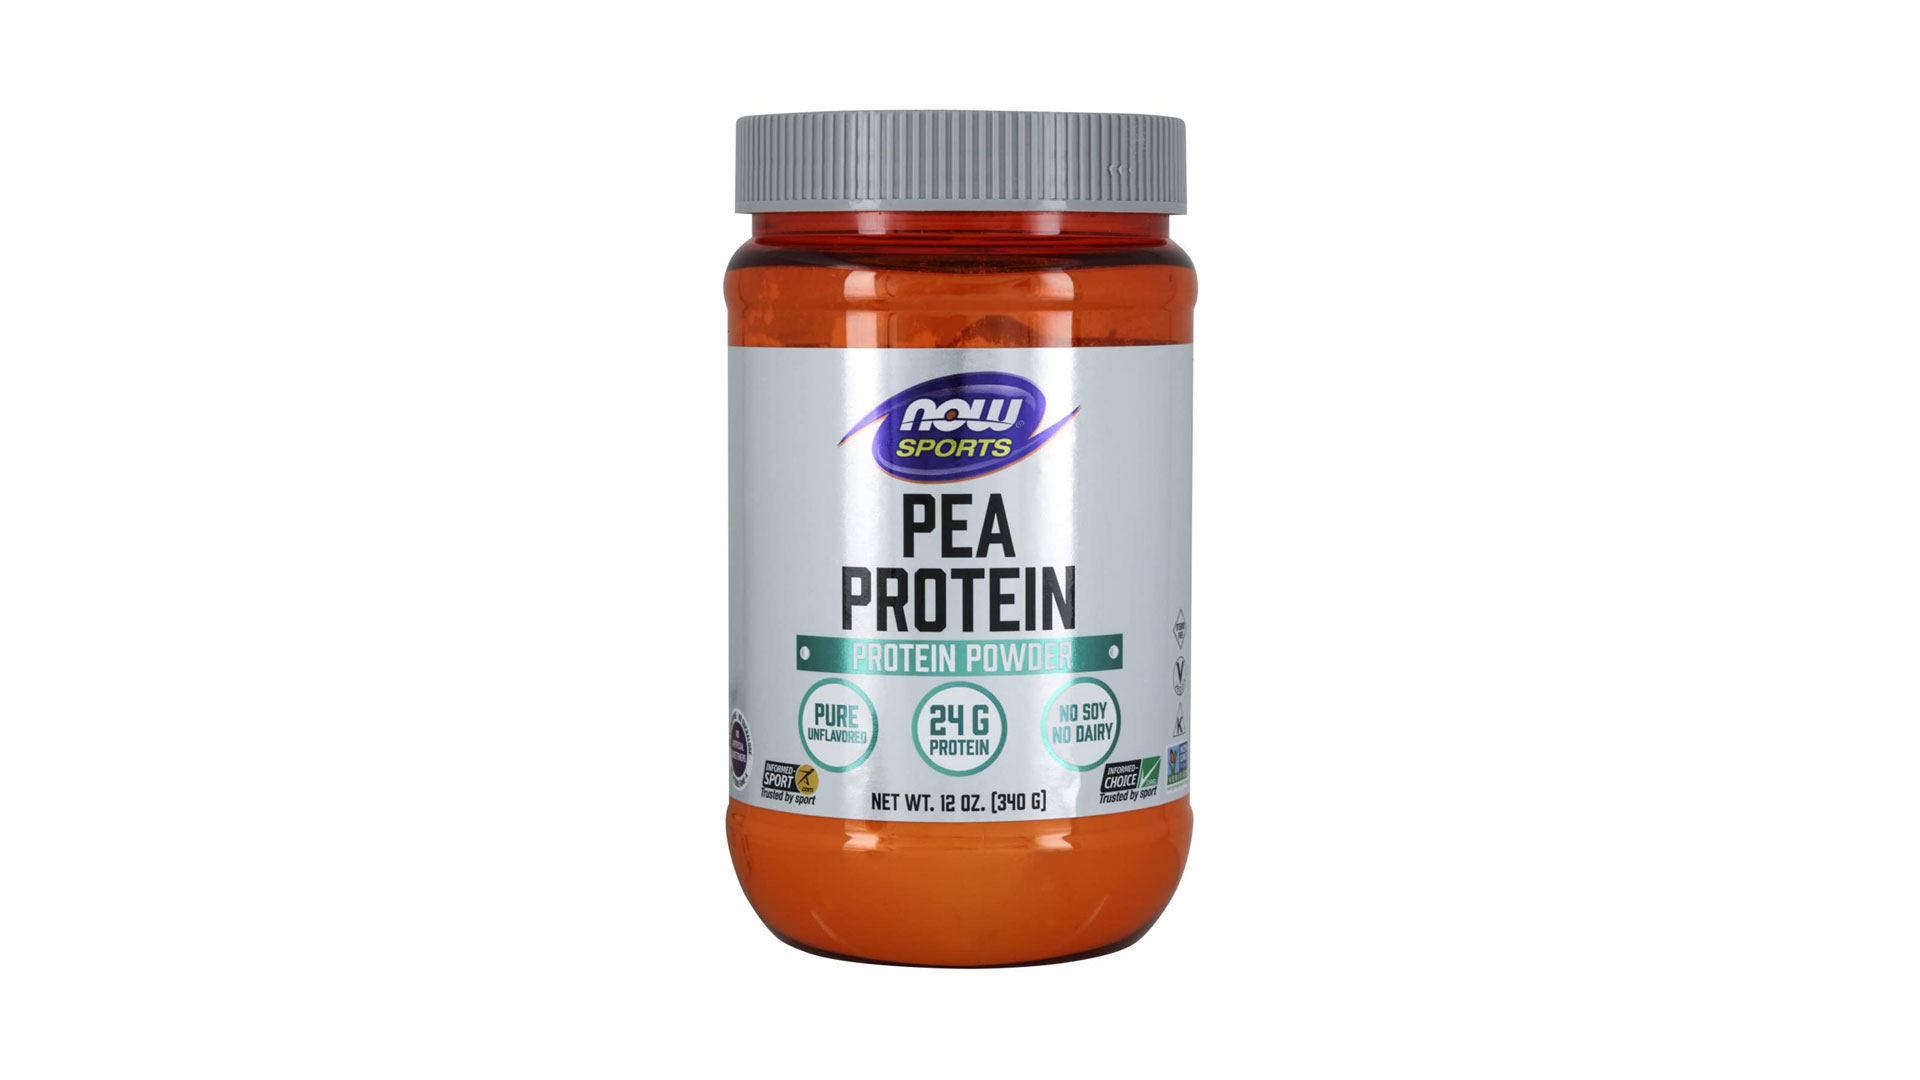 Best vegan protein powders: Now Sports Pea Protein Powder